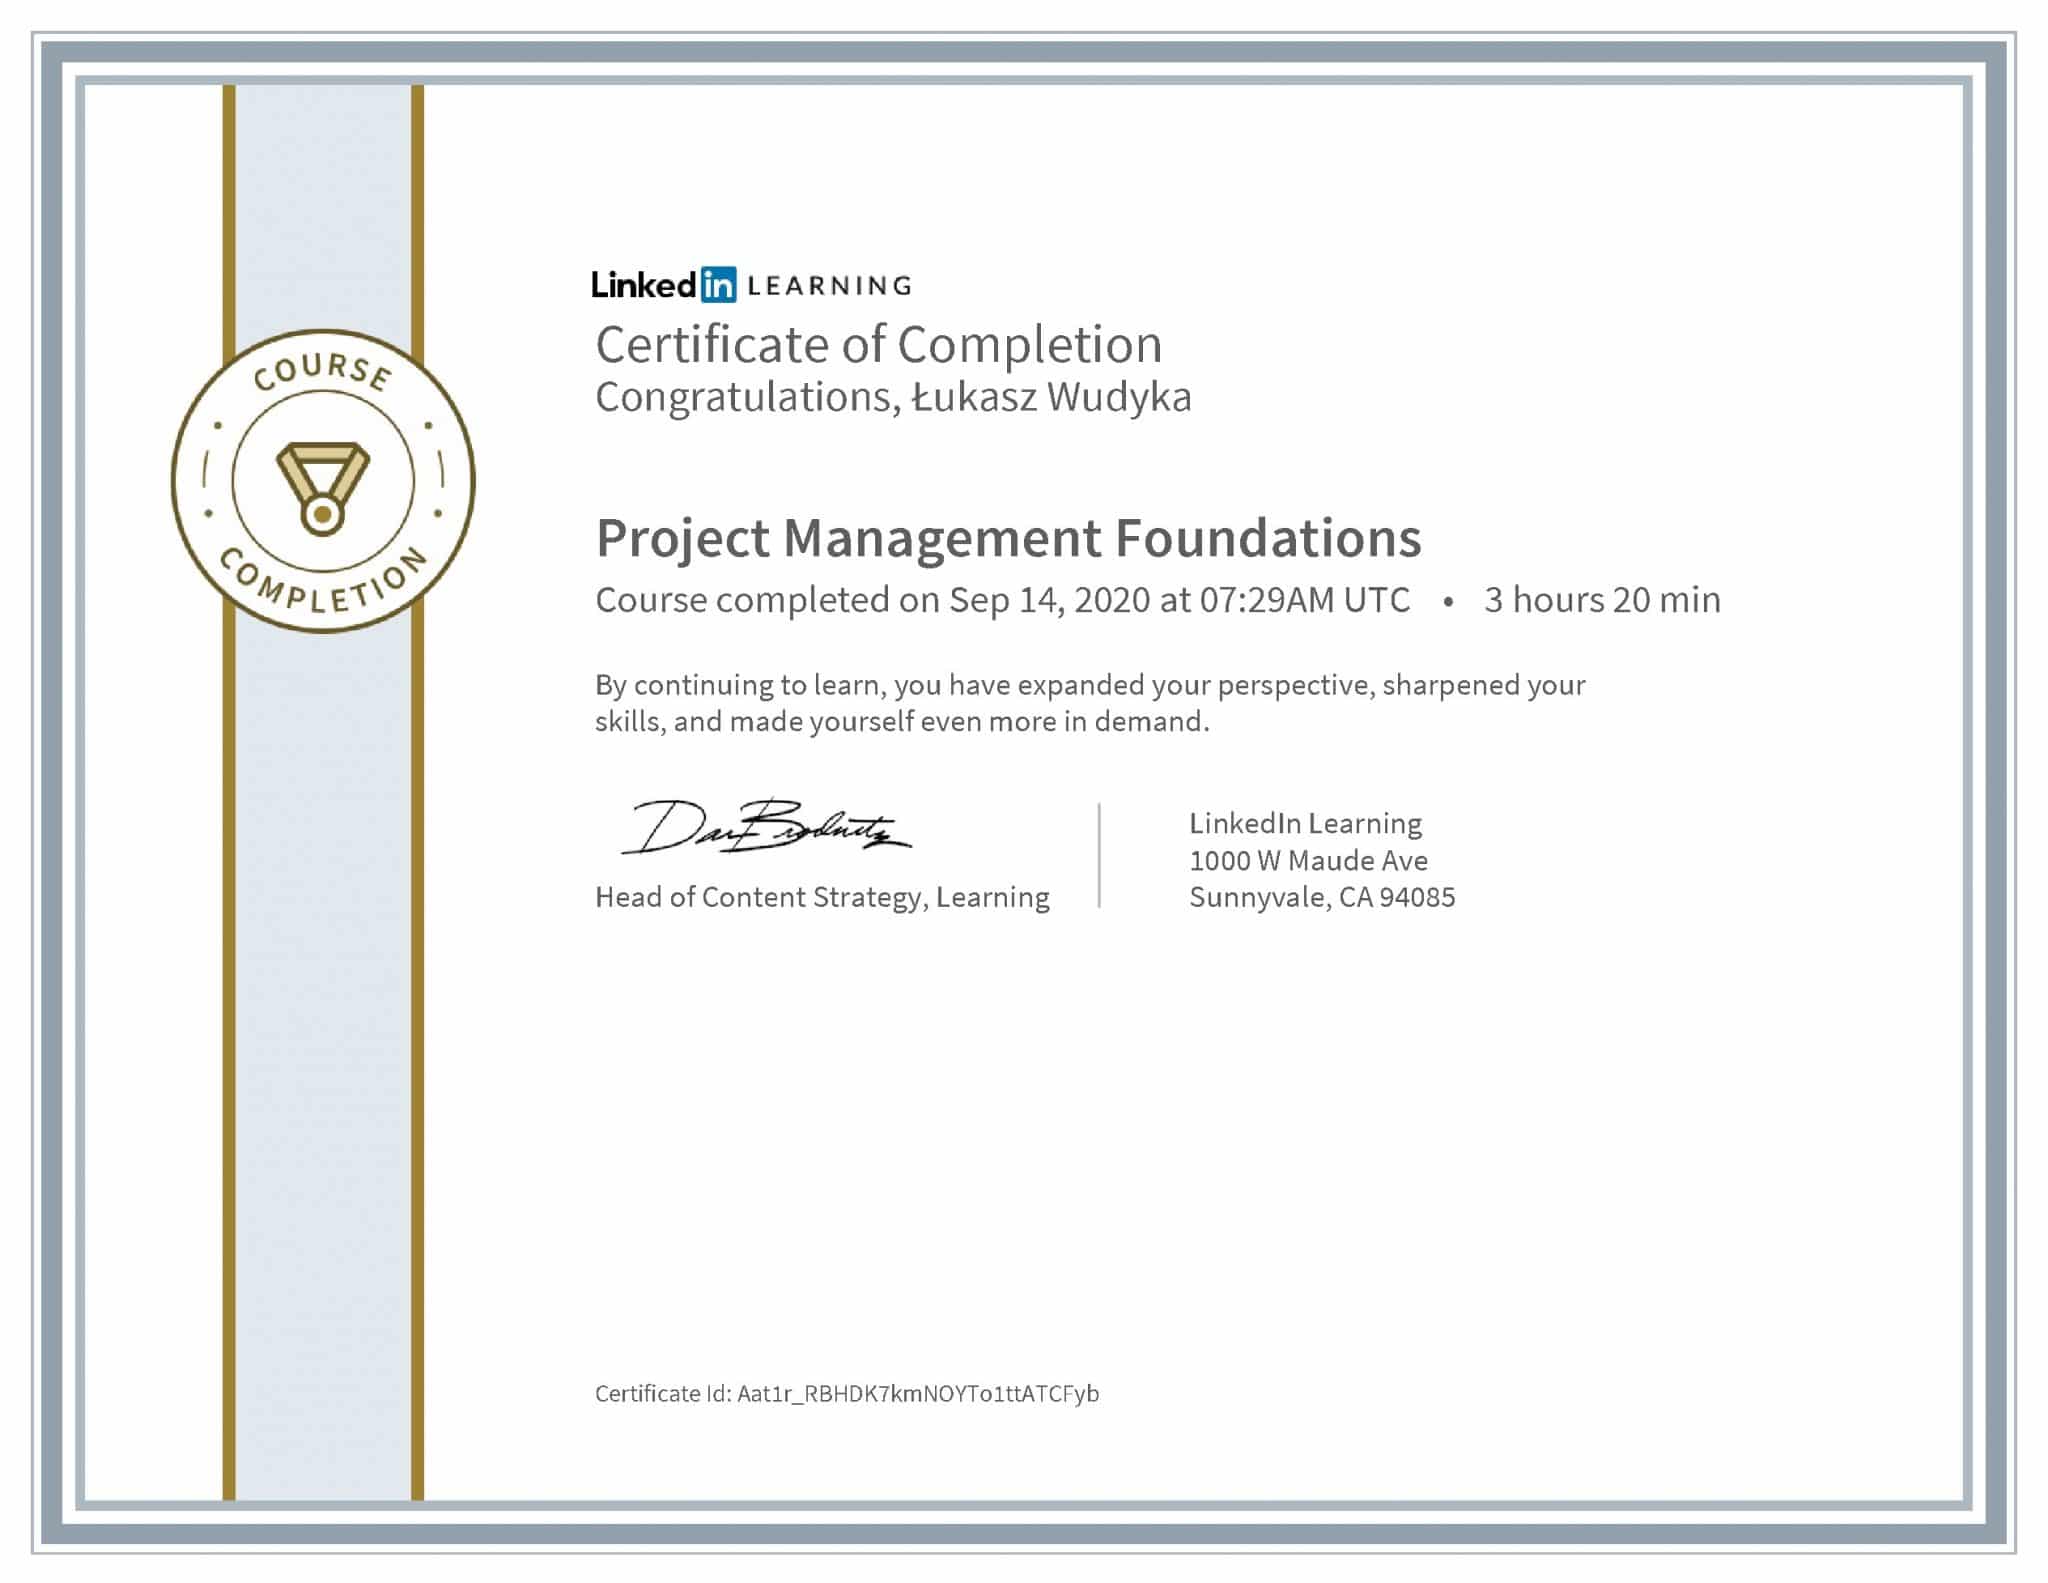 Łukasz Wudyka certyfikat LinkedIn Project Management Foundations